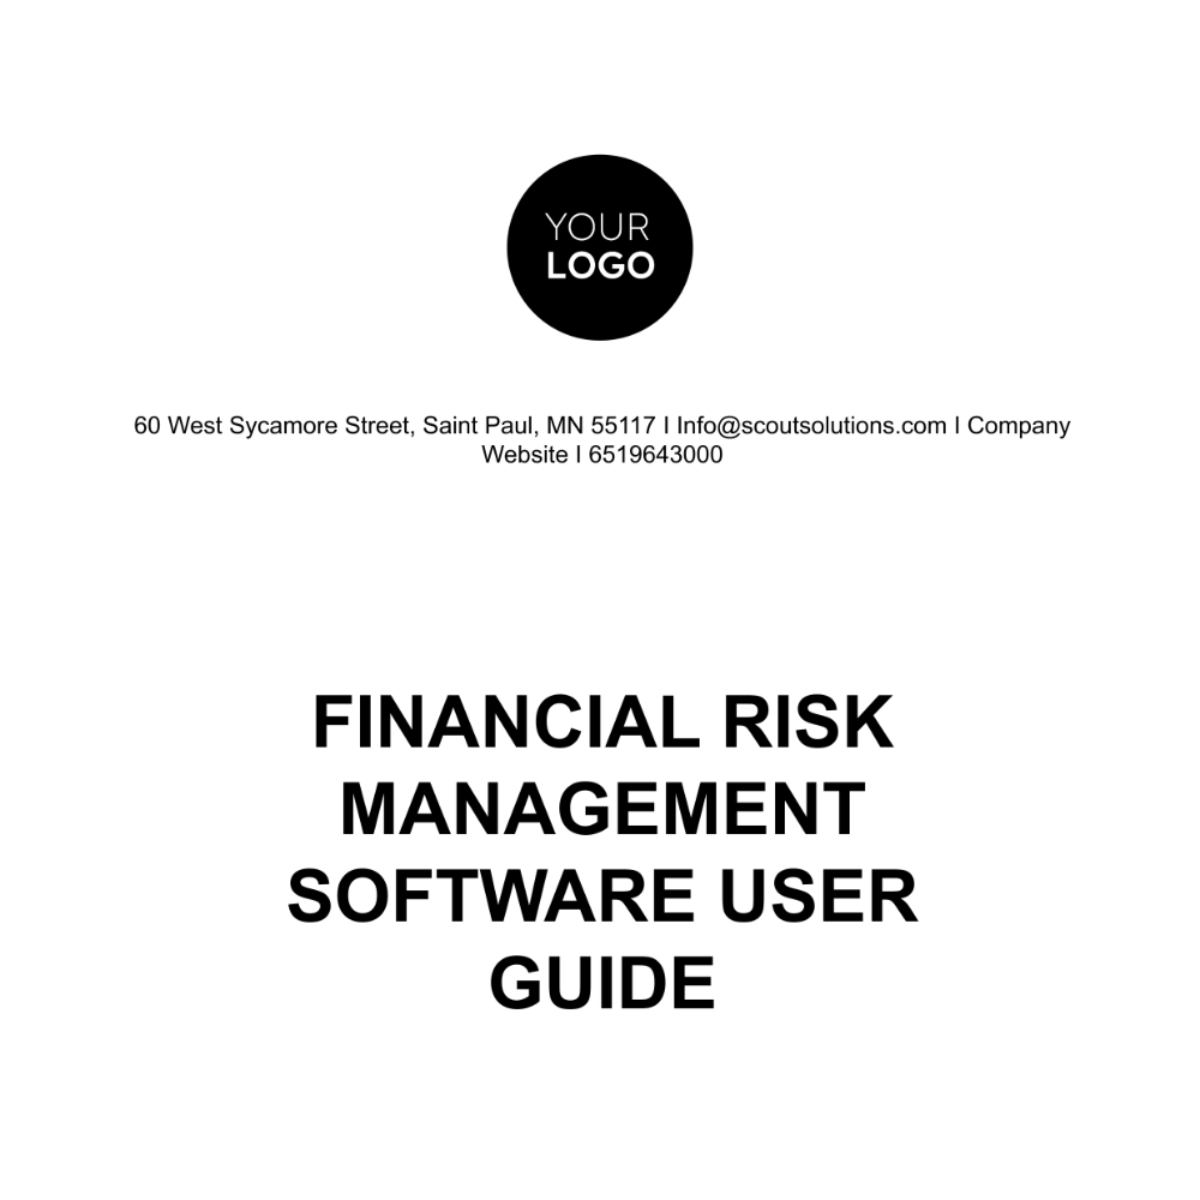 Financial Risk Management Software User Guide Template